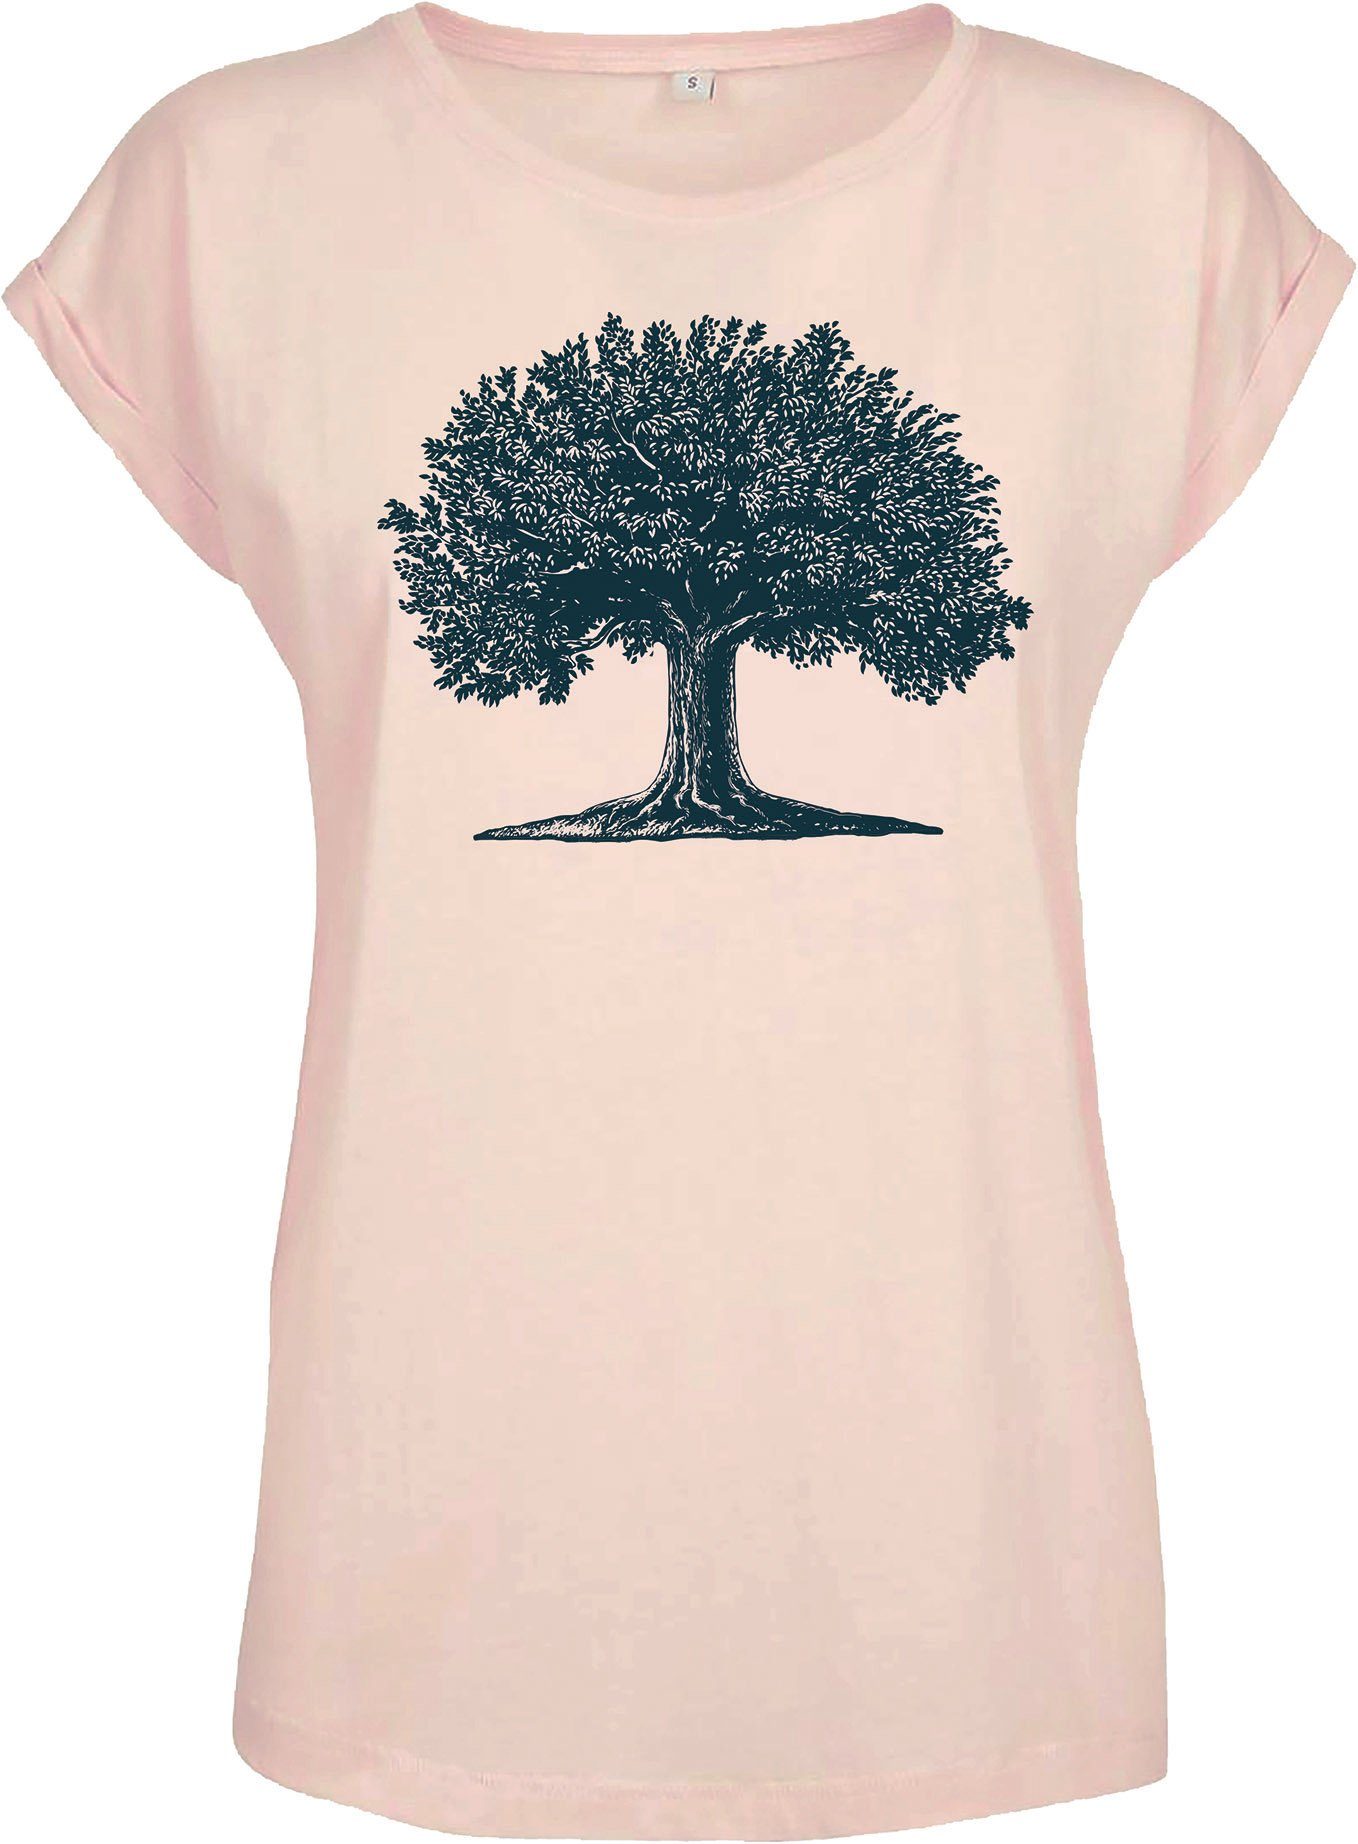 Baddery Print-Shirt Garten T-Shirt Damen : Arbor Magna - Frauen Tshirt - Nature Shirt Baum, hochwertiger Siebdruck, aus Baumwolle